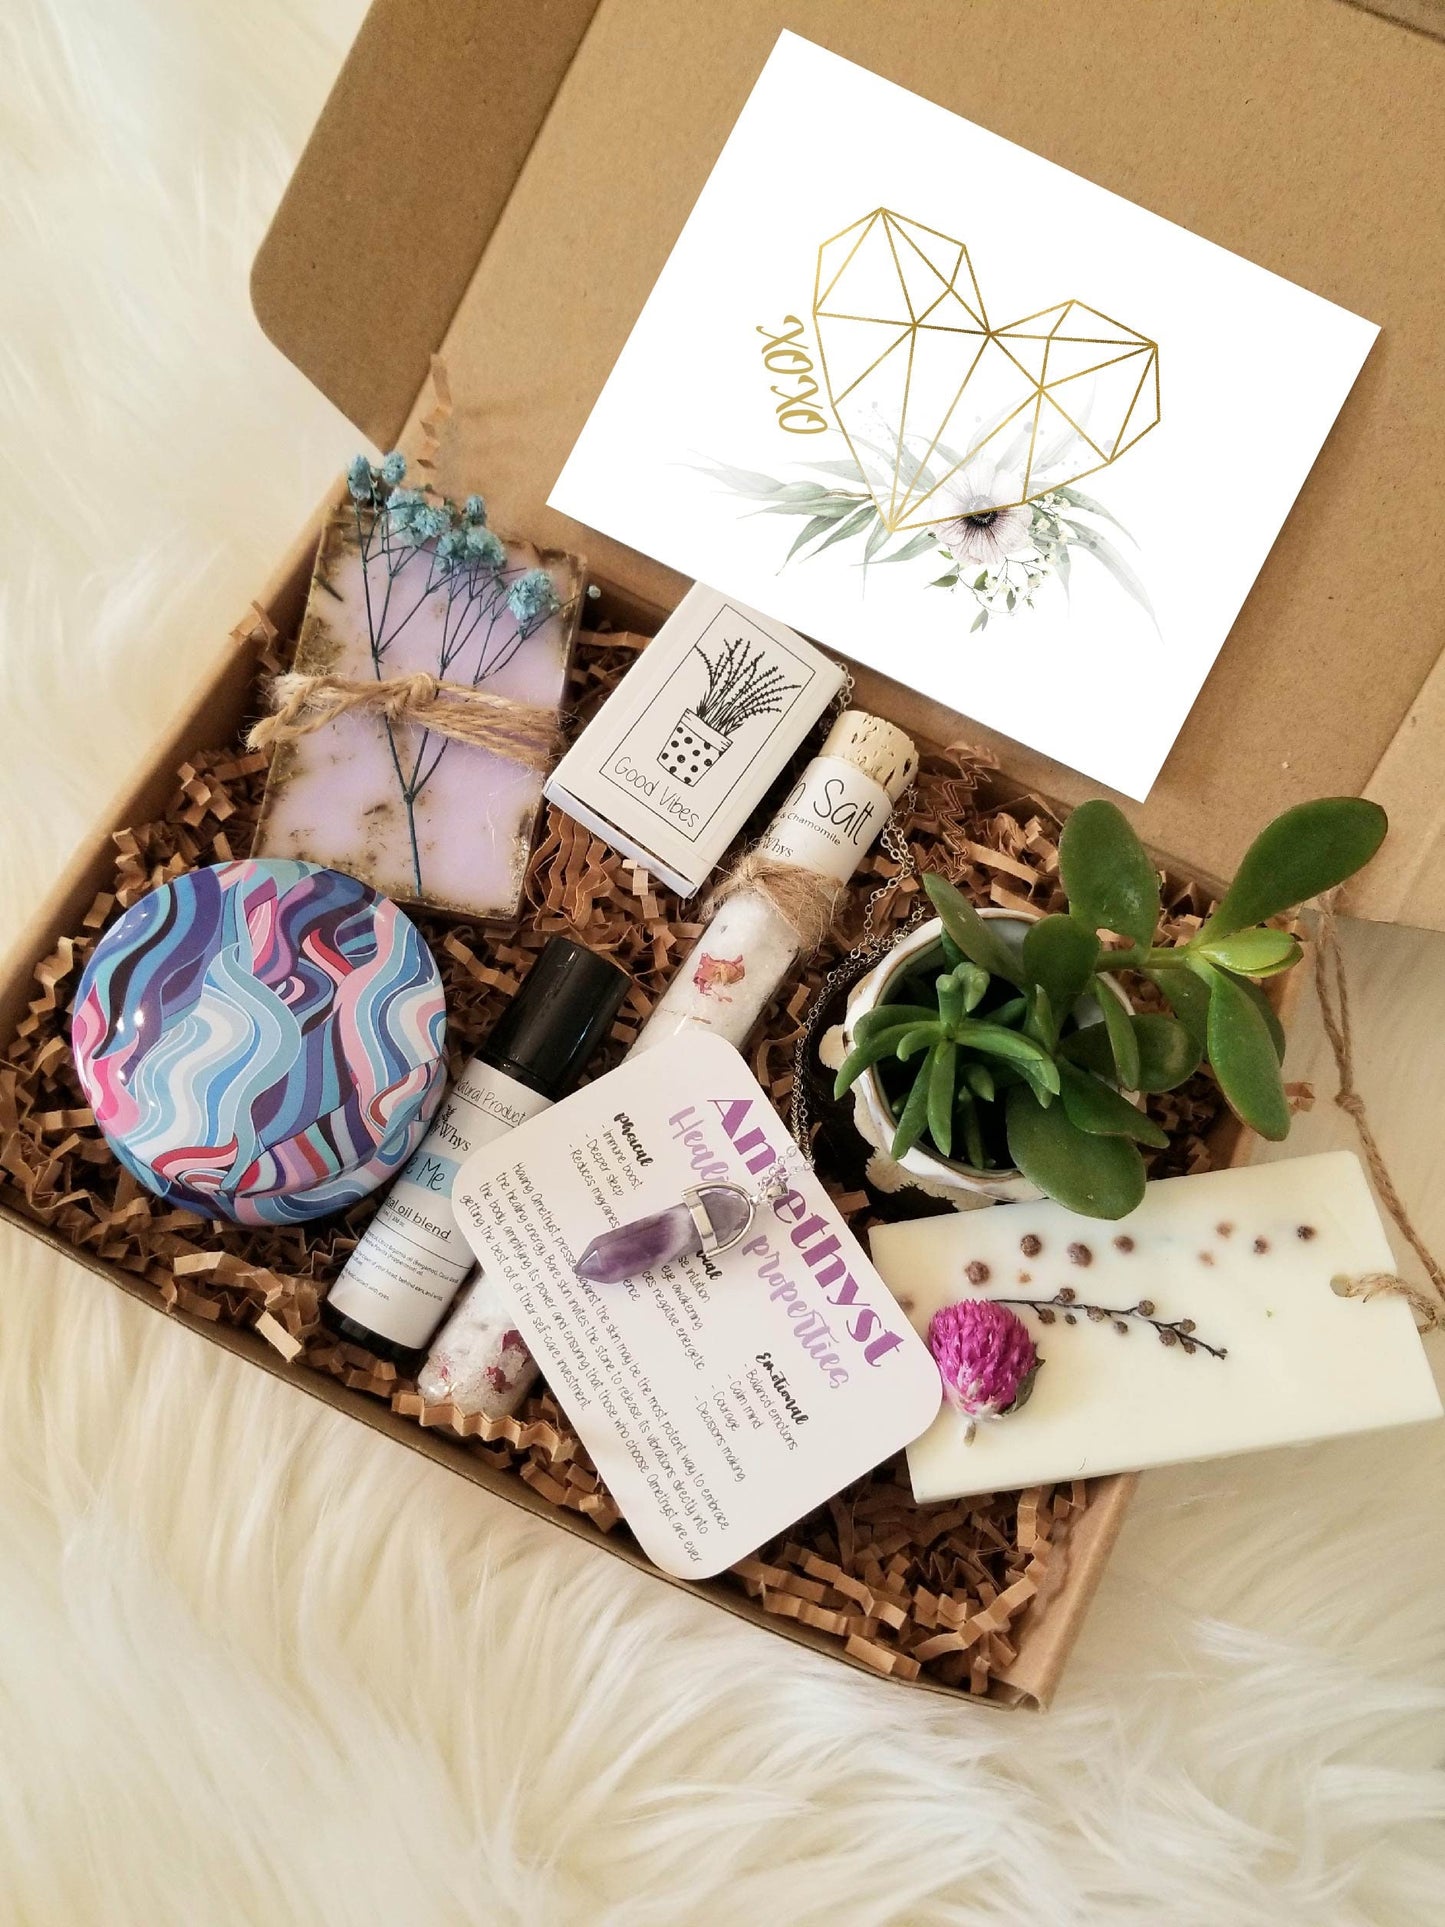 XOXO - Valentines day spa gift set, Send love in a box